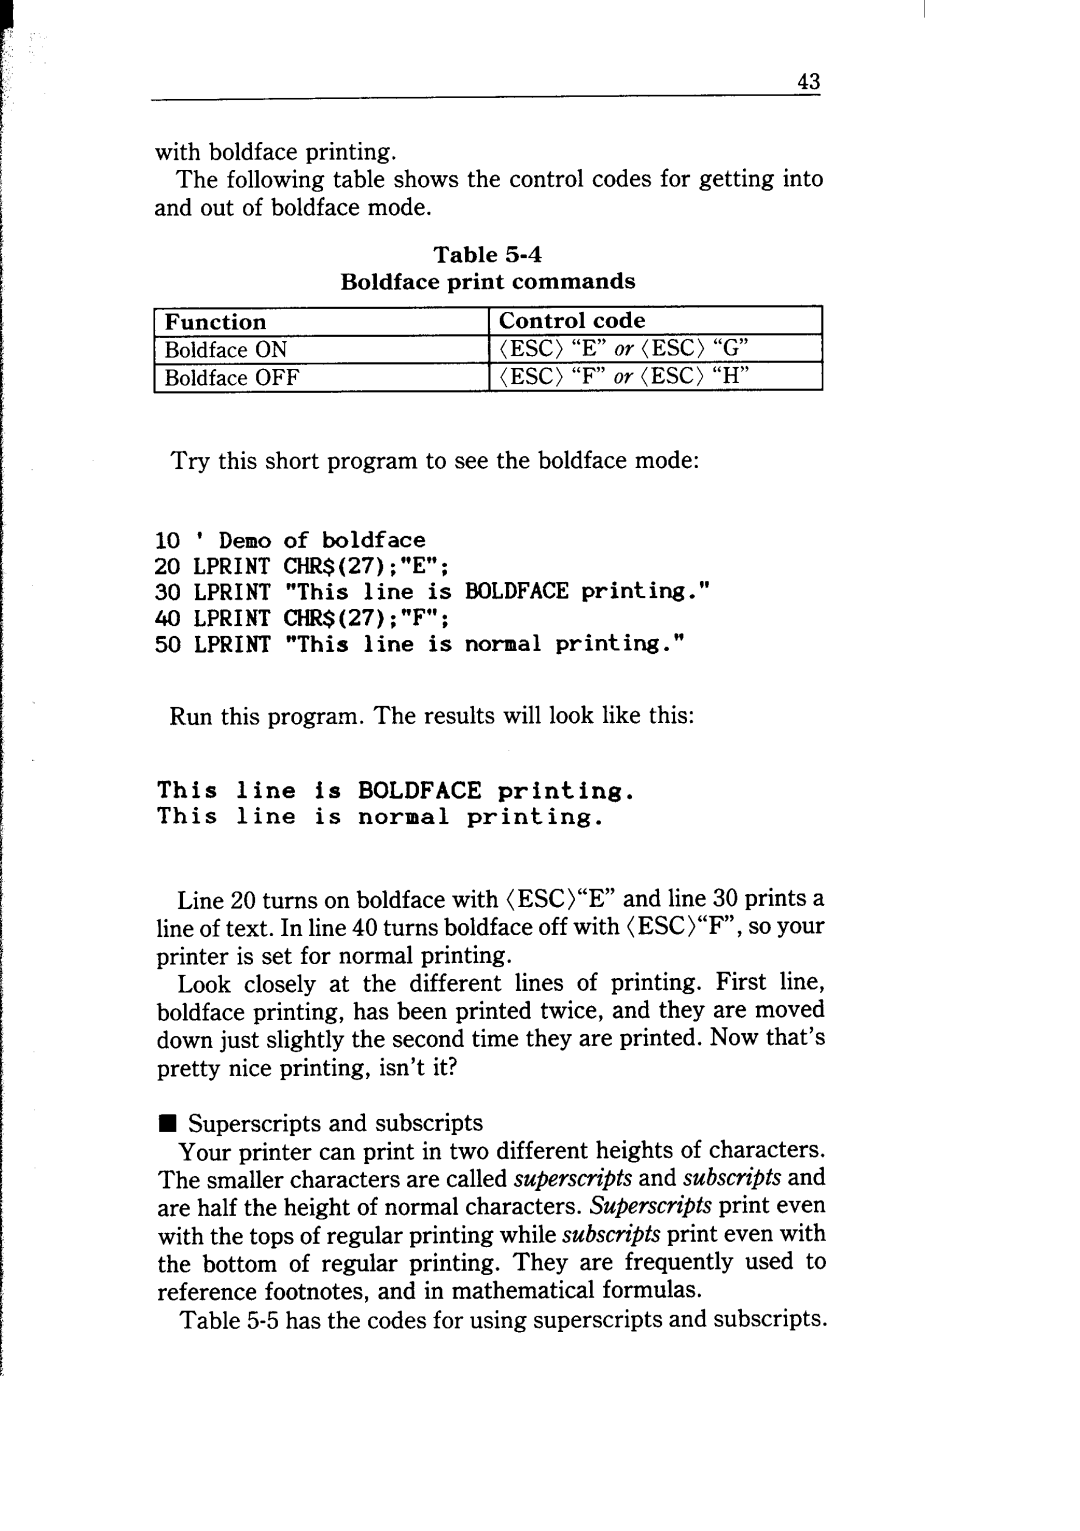 Star Micronics NB-15 user manual Demo of boldface, LPRINT “This line is BOLDFACE printing 40 LPRINT CHR$27F 